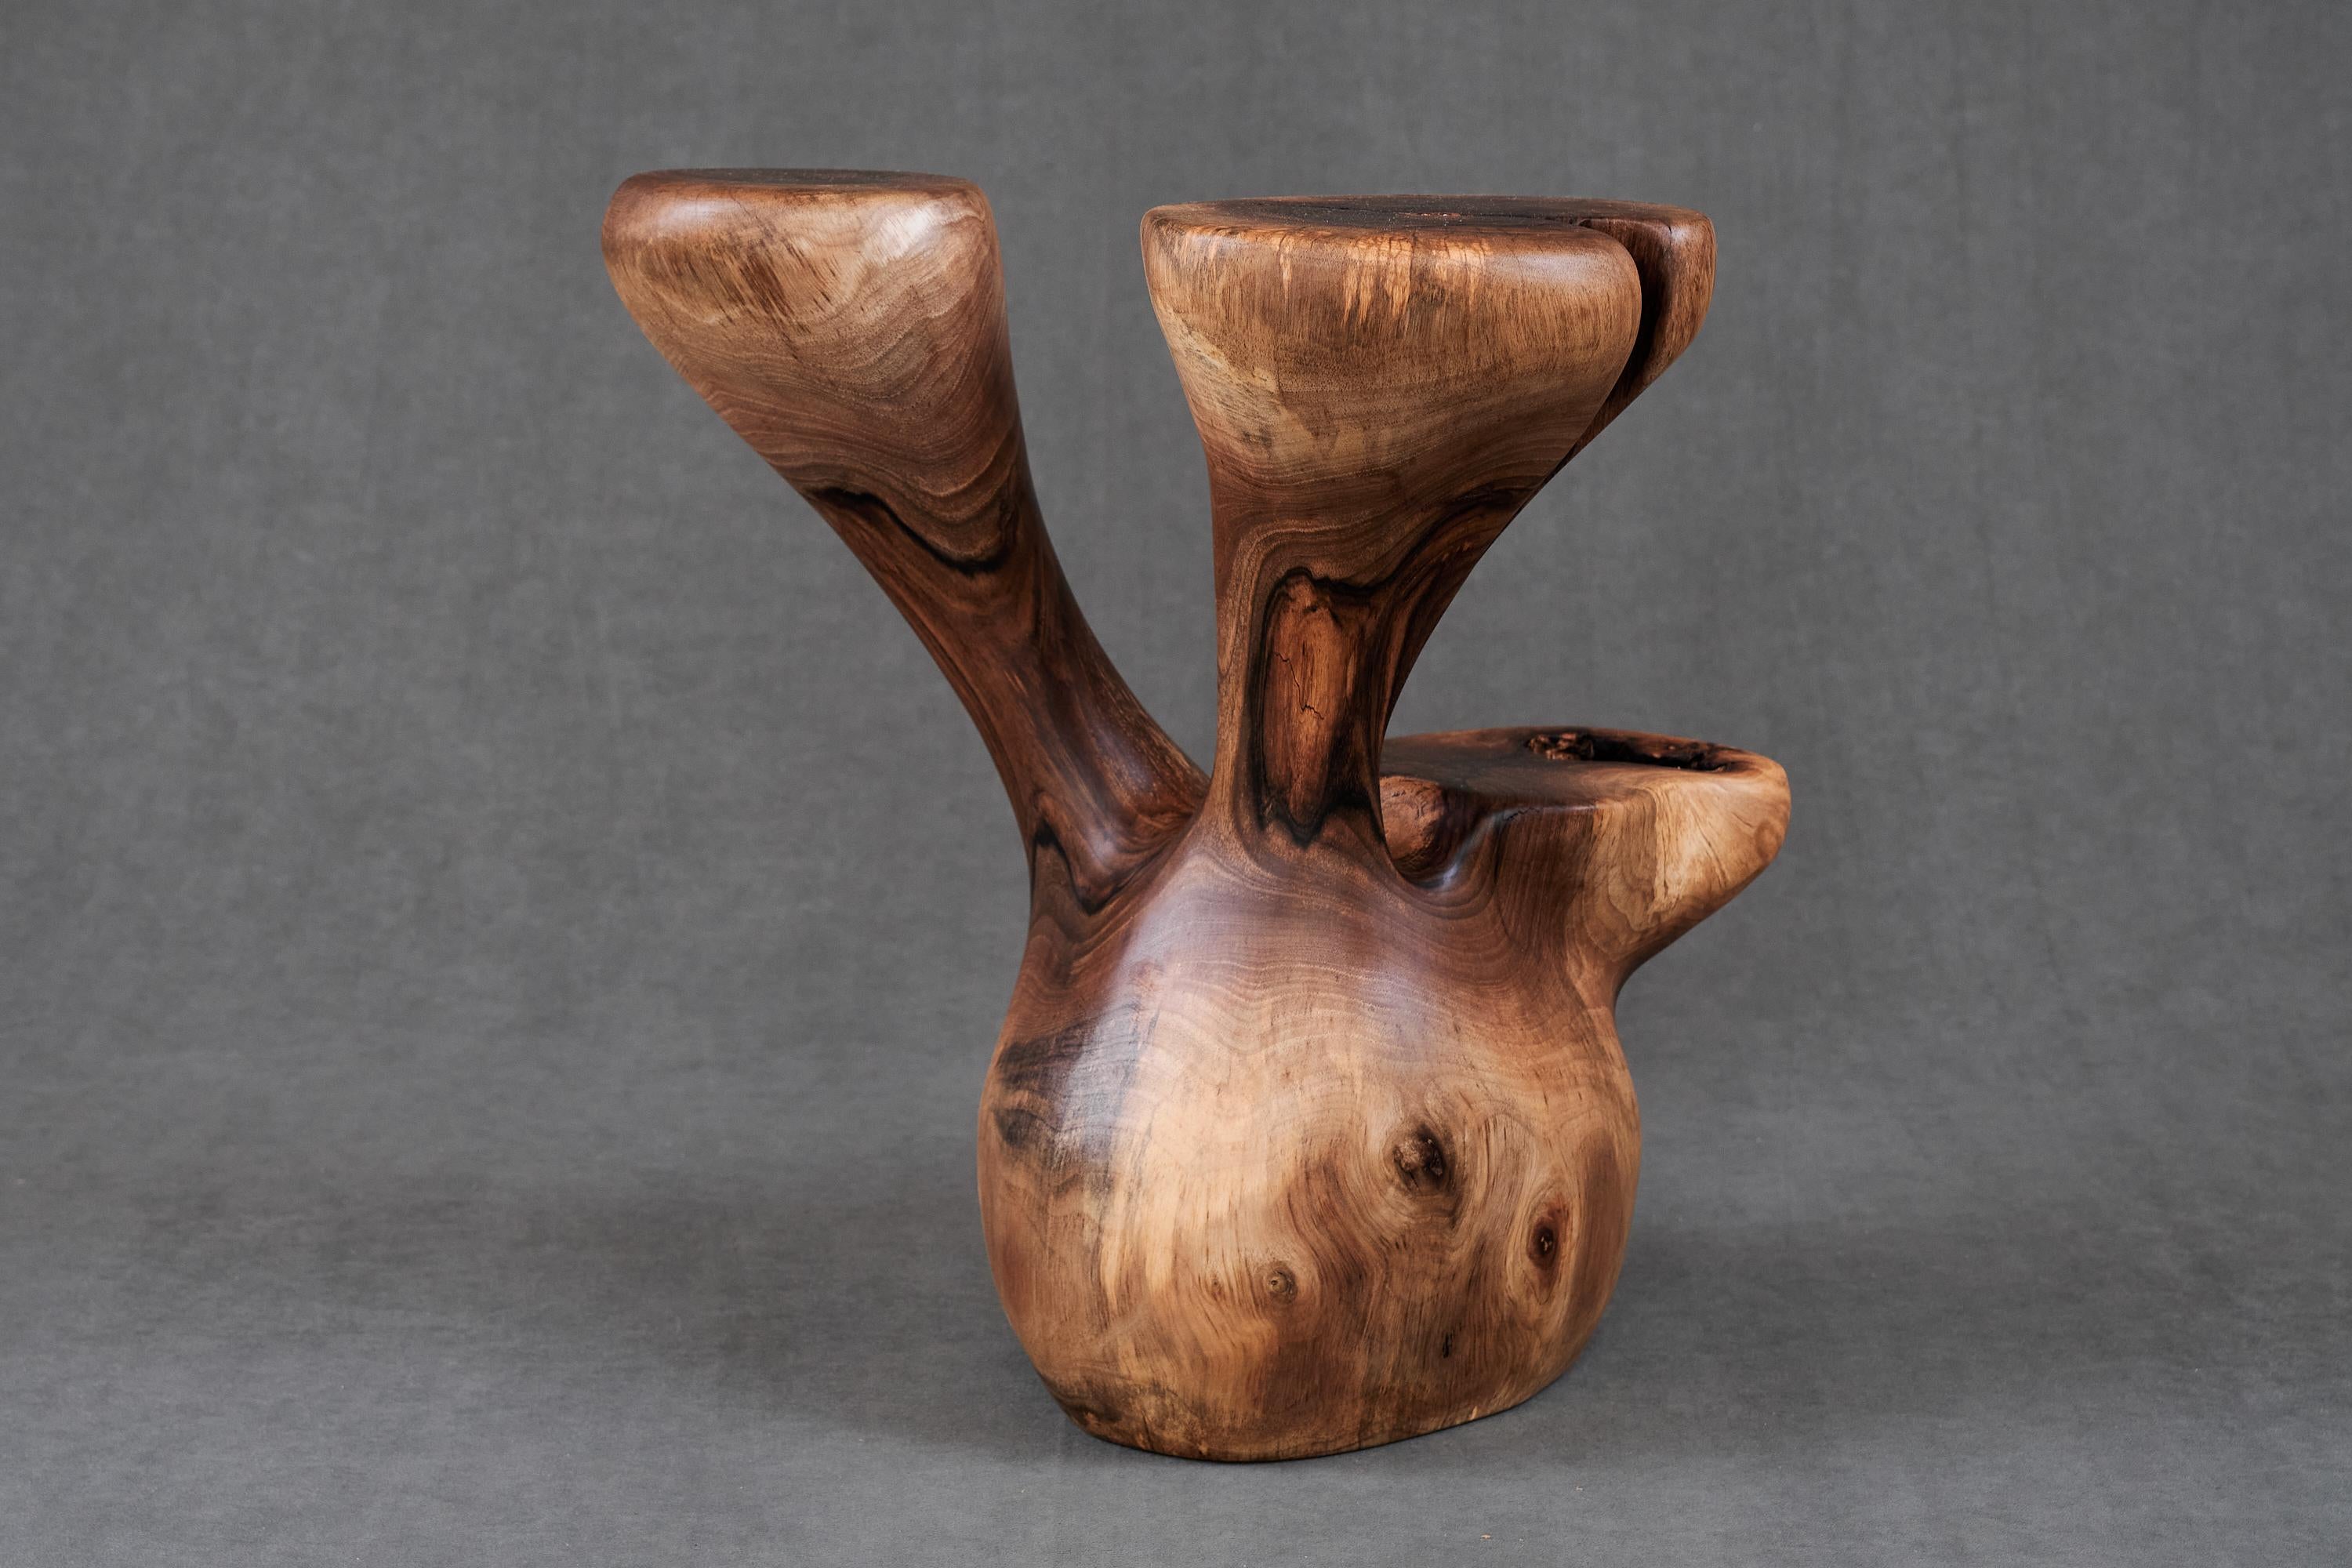 Solid Wood Sculptural Side Table, Original Contemporary Design, Logniture For Sale 7